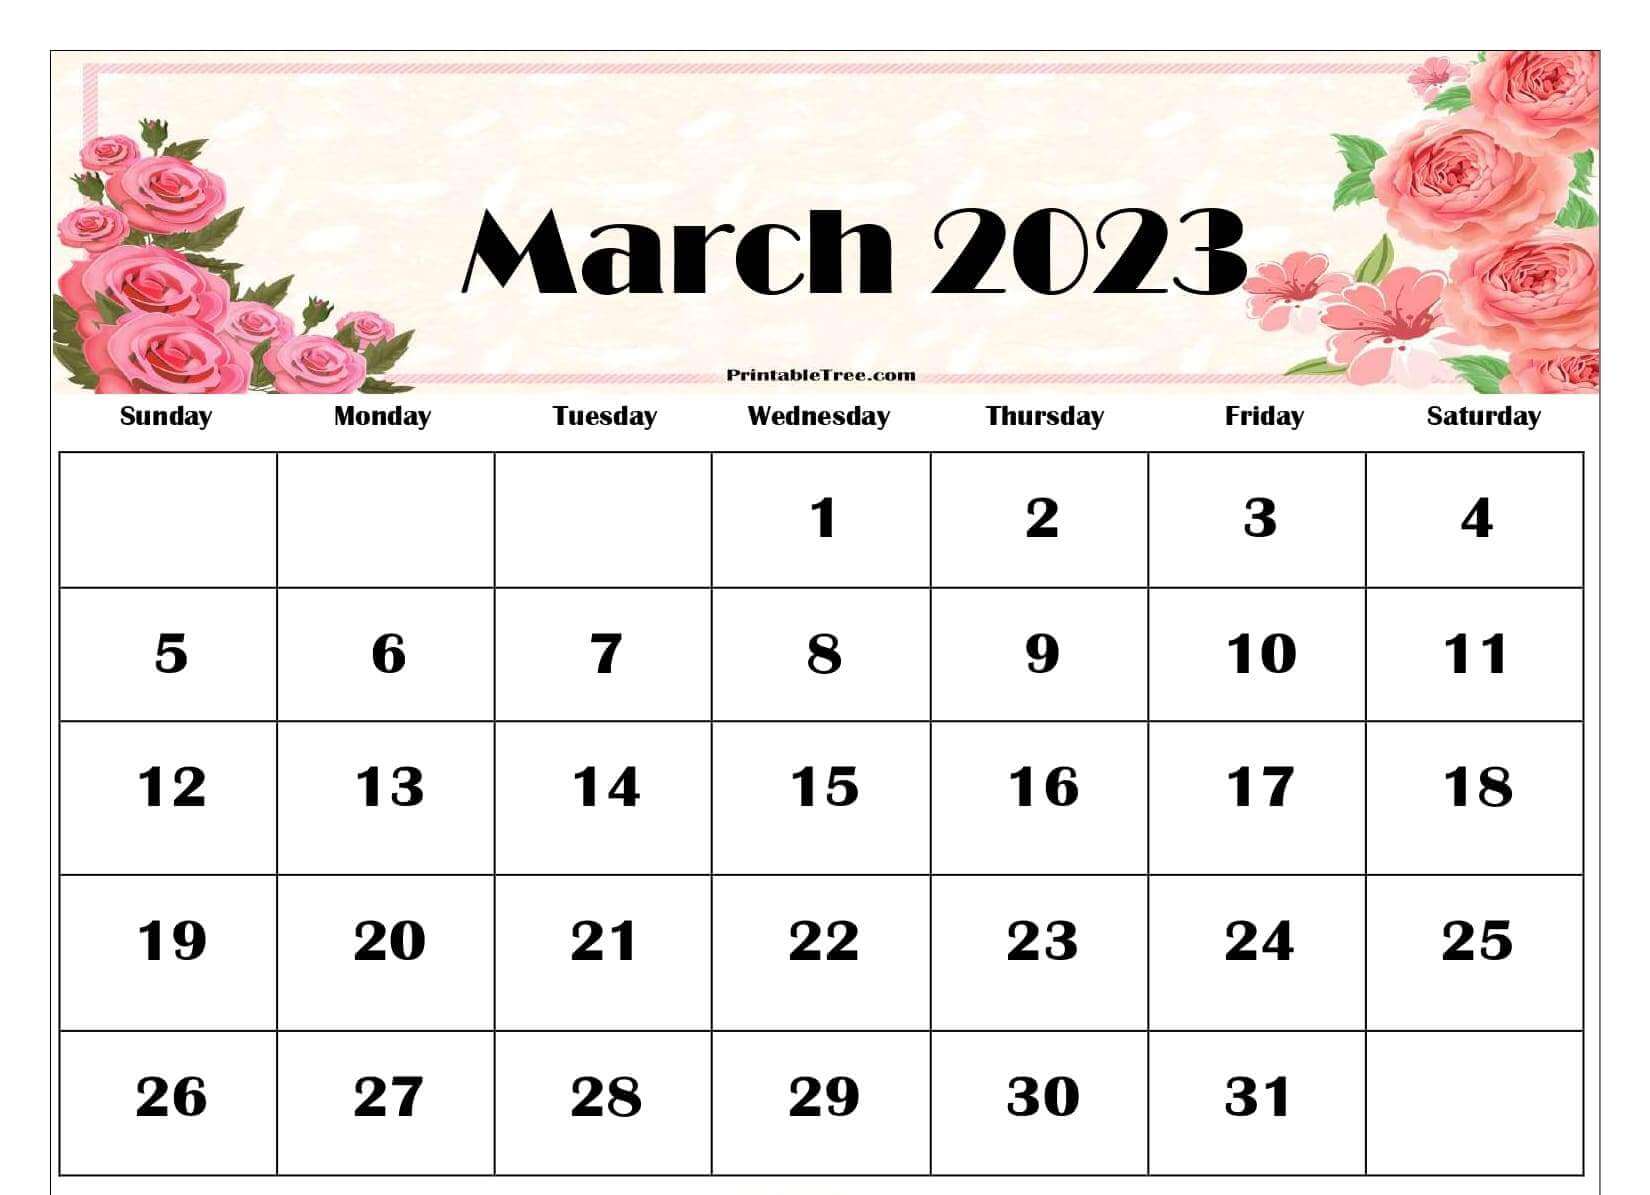 March 2023 Floral Calendar Printable